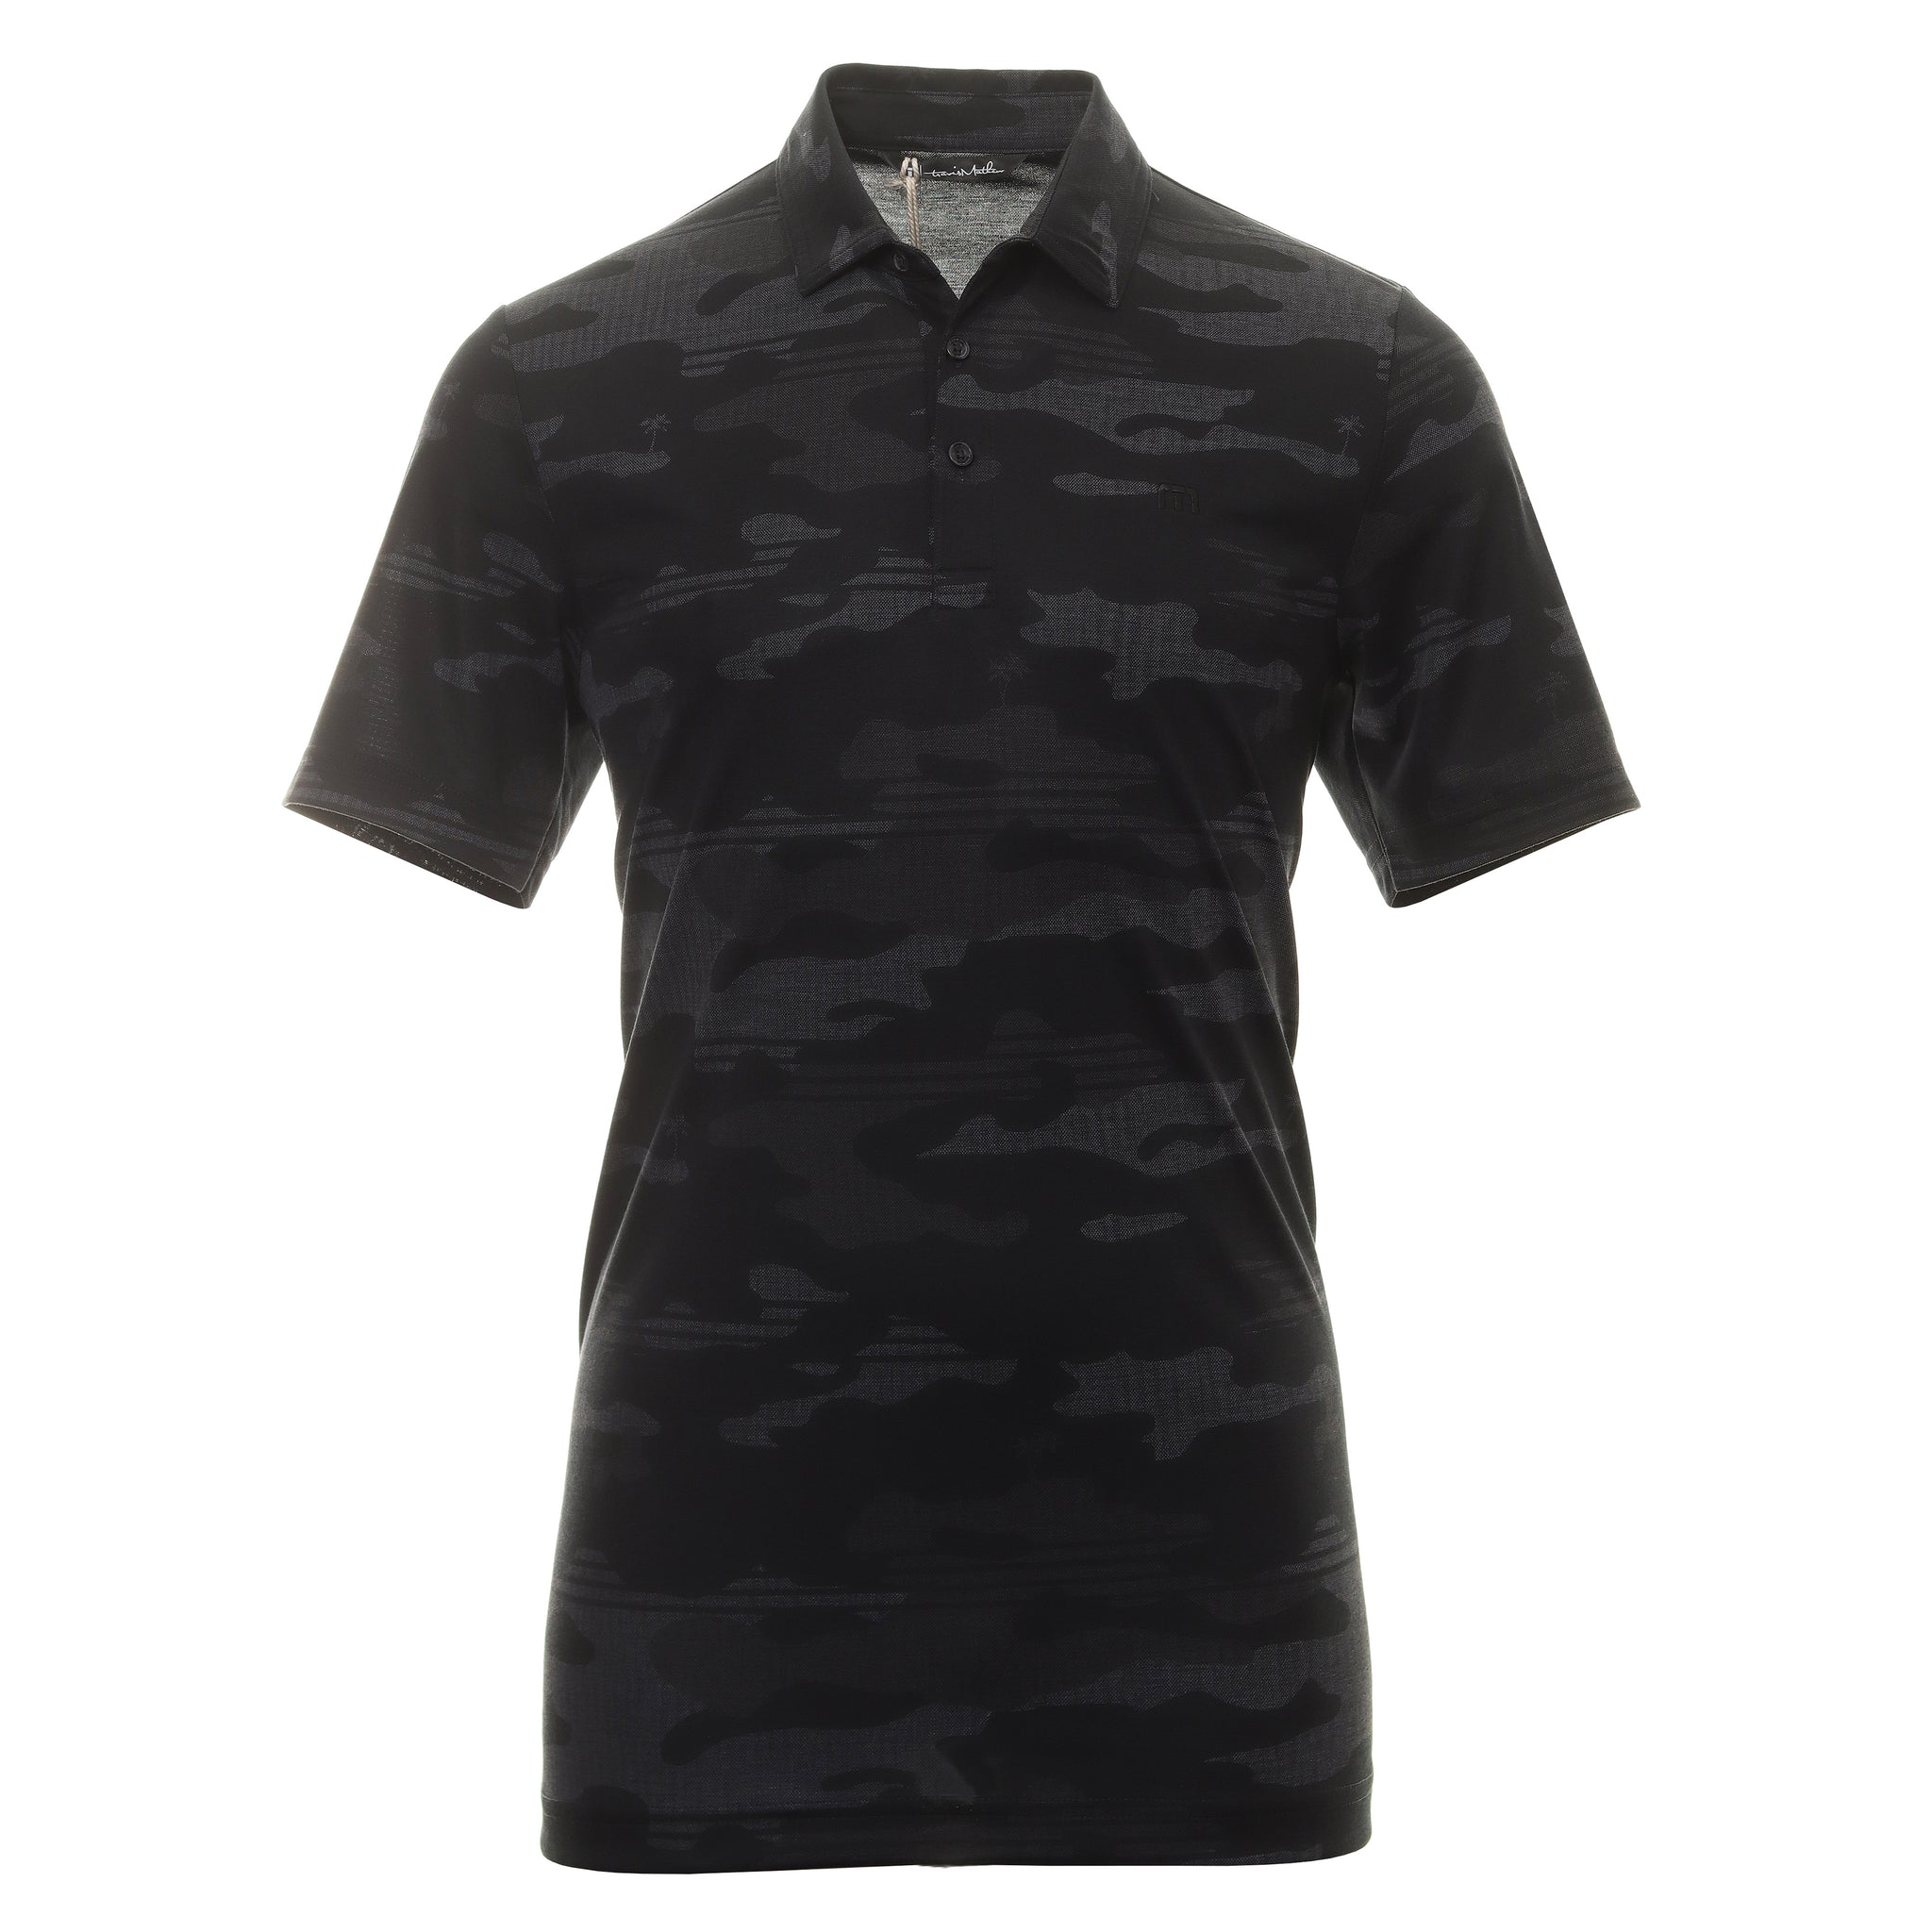 travismathew-beachside-stealth-polo-shirt-1my588-black